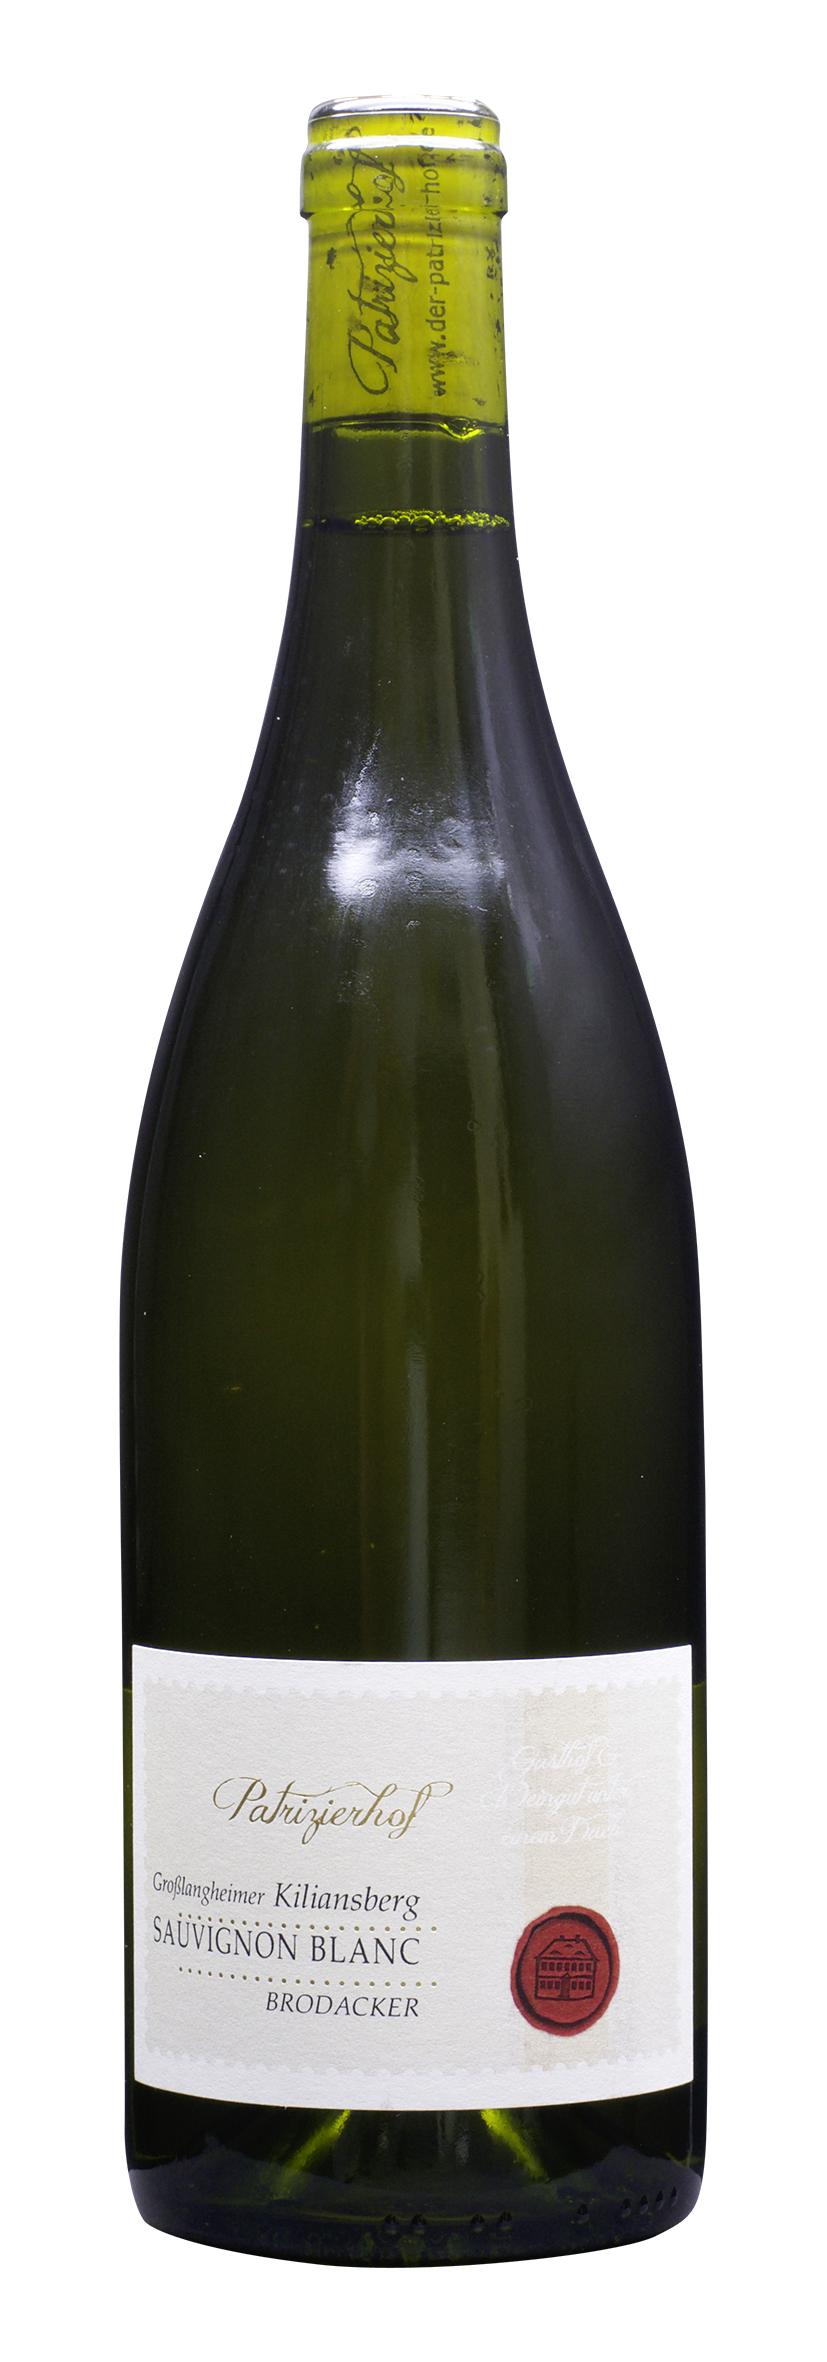 Sauvignon Blanc Brodacker 2015